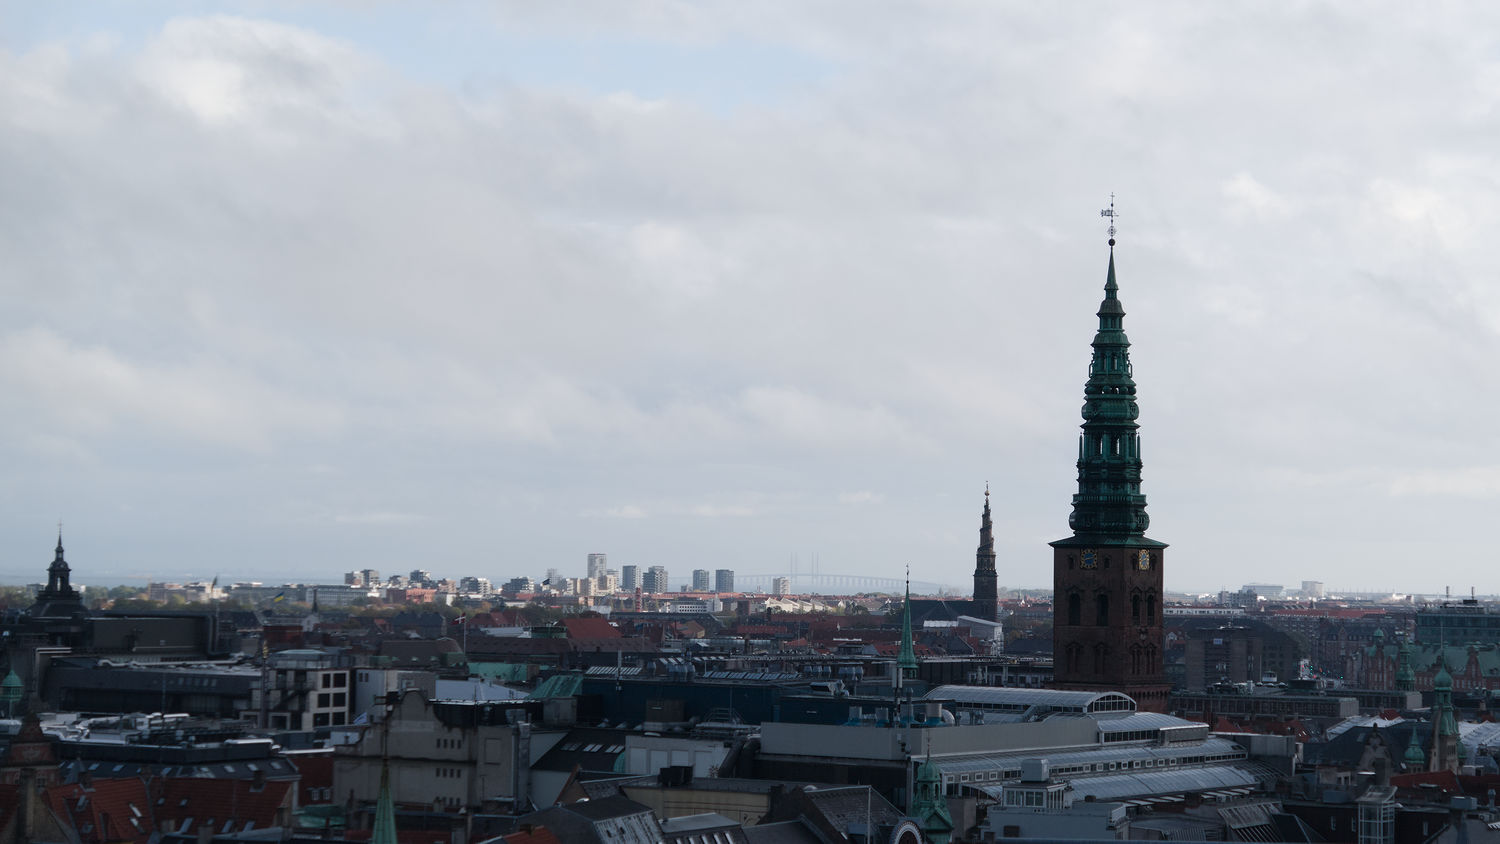 View over Copenhagen from the Round Tower. In the background Öresund-Bridge is visible